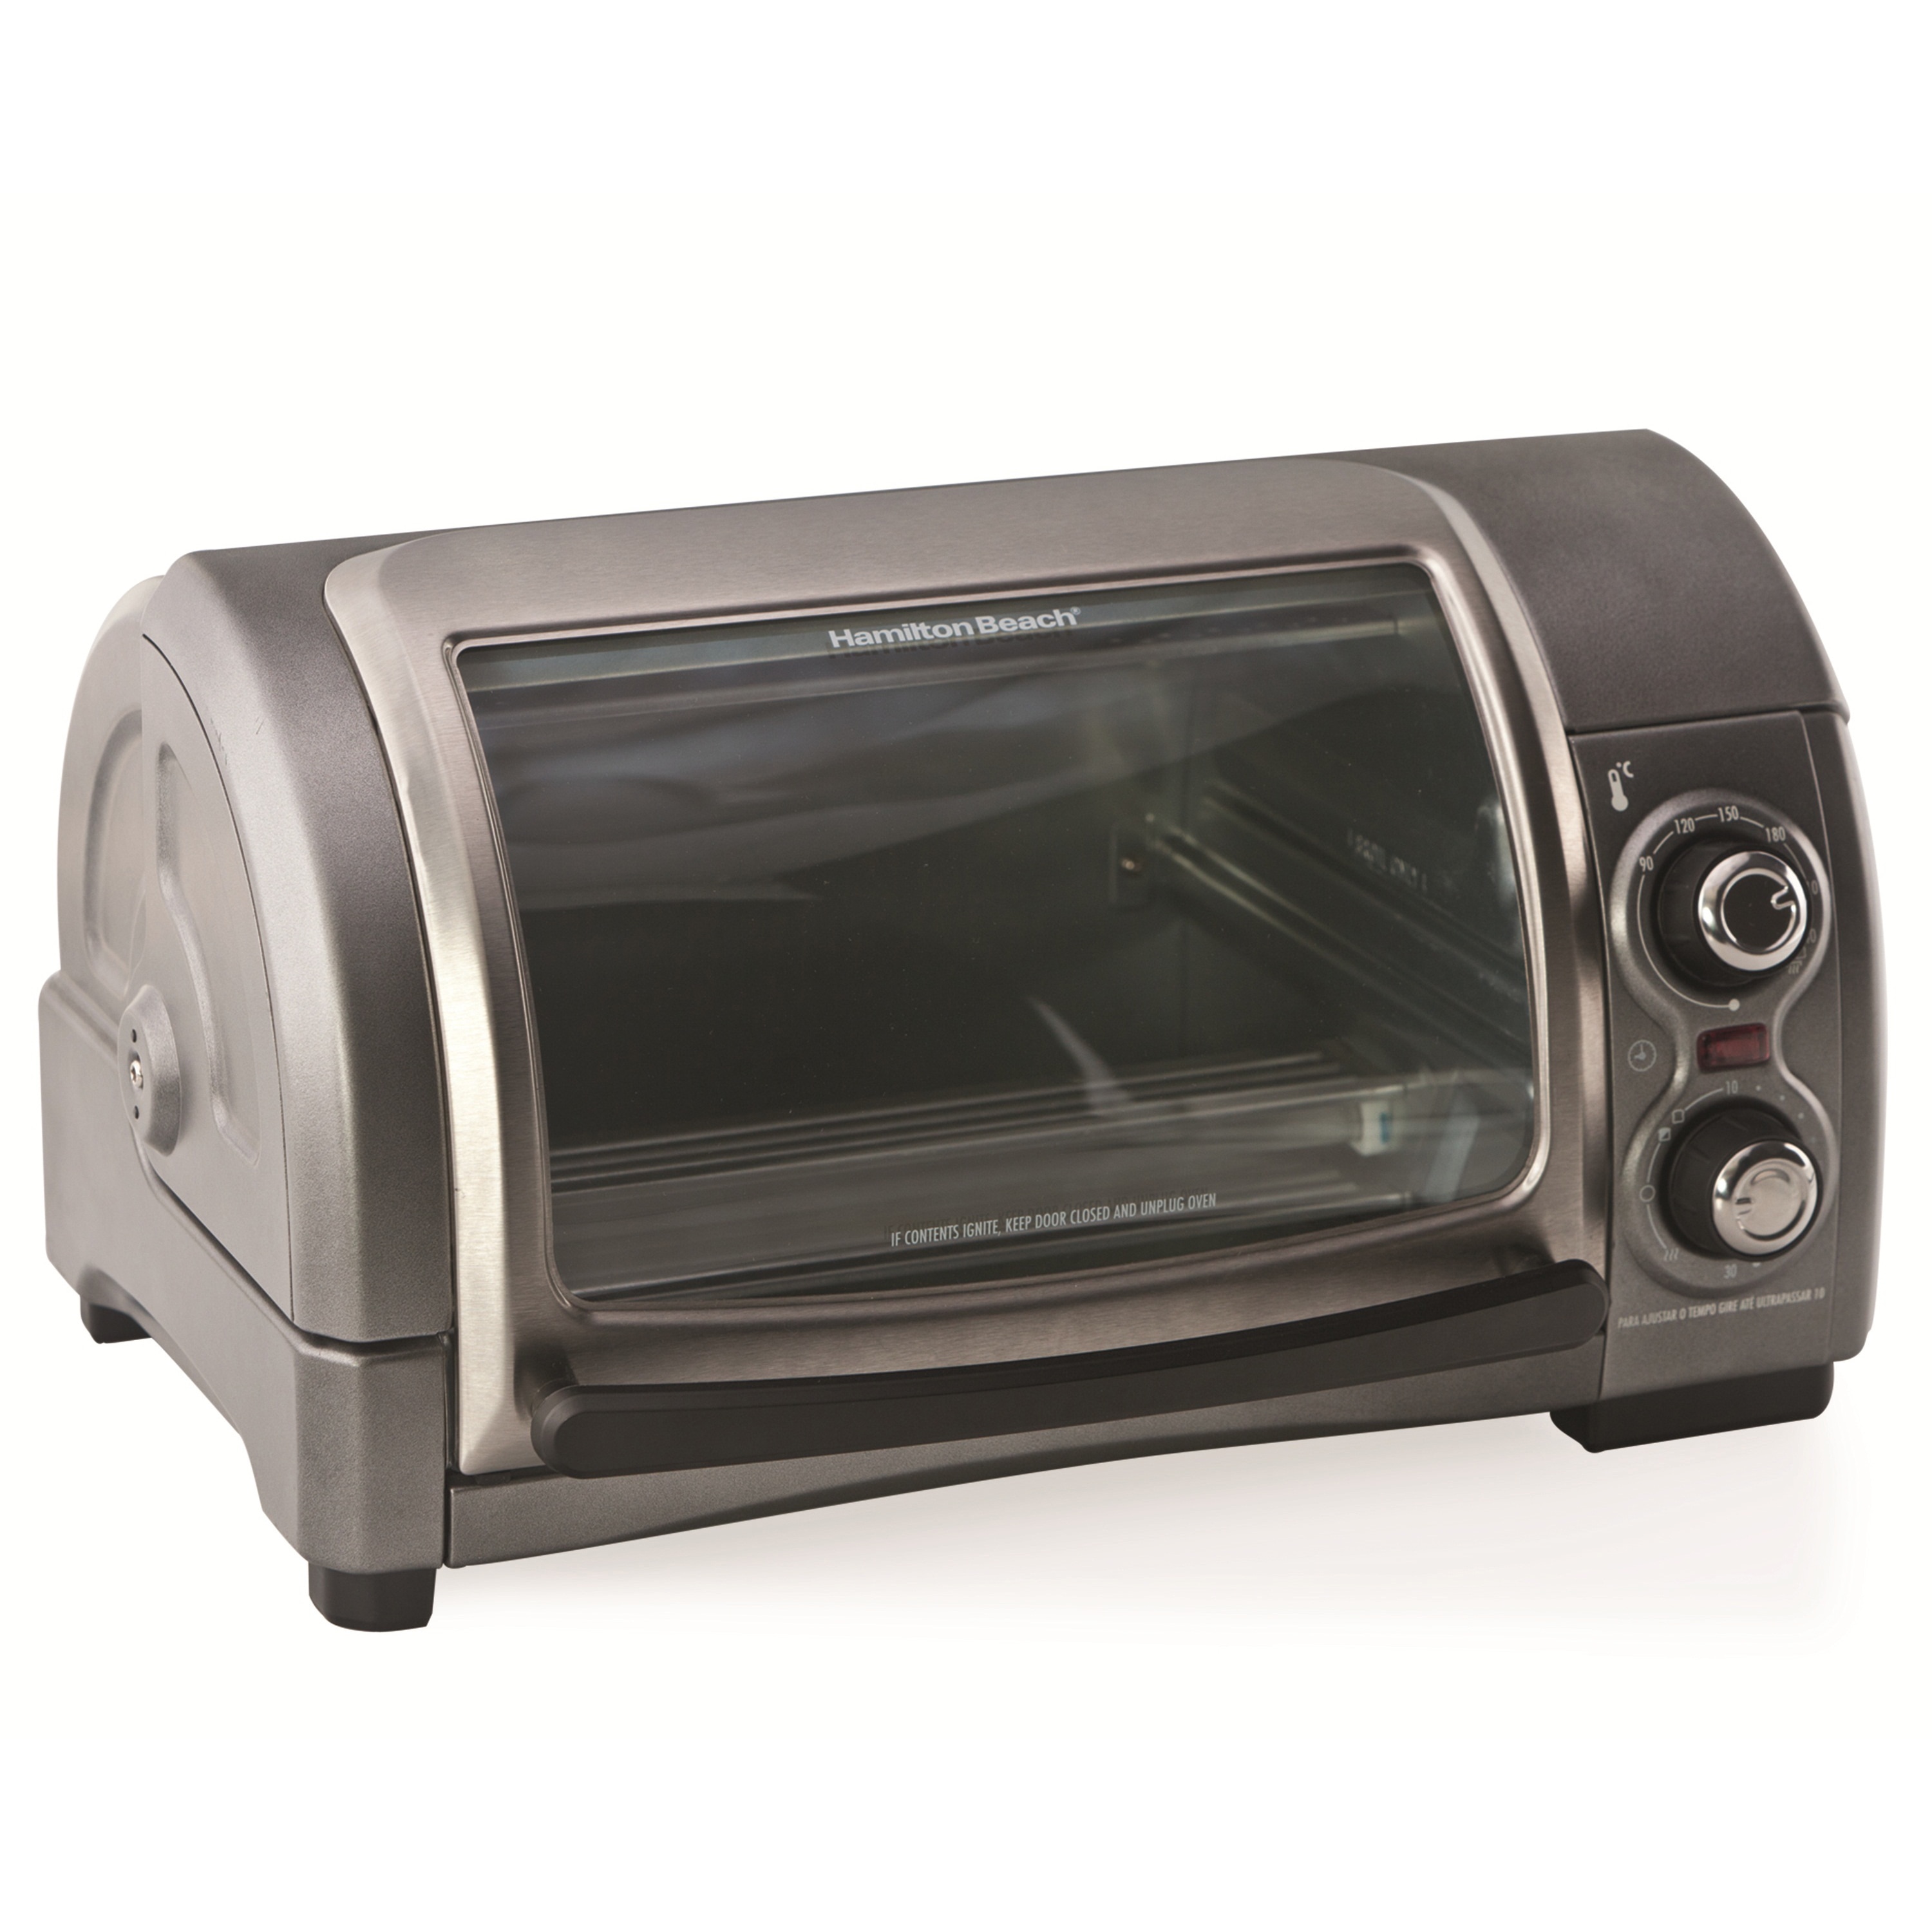 Hamilton Beach Easy Reach 31334 Toaster & Toaster Oven Review